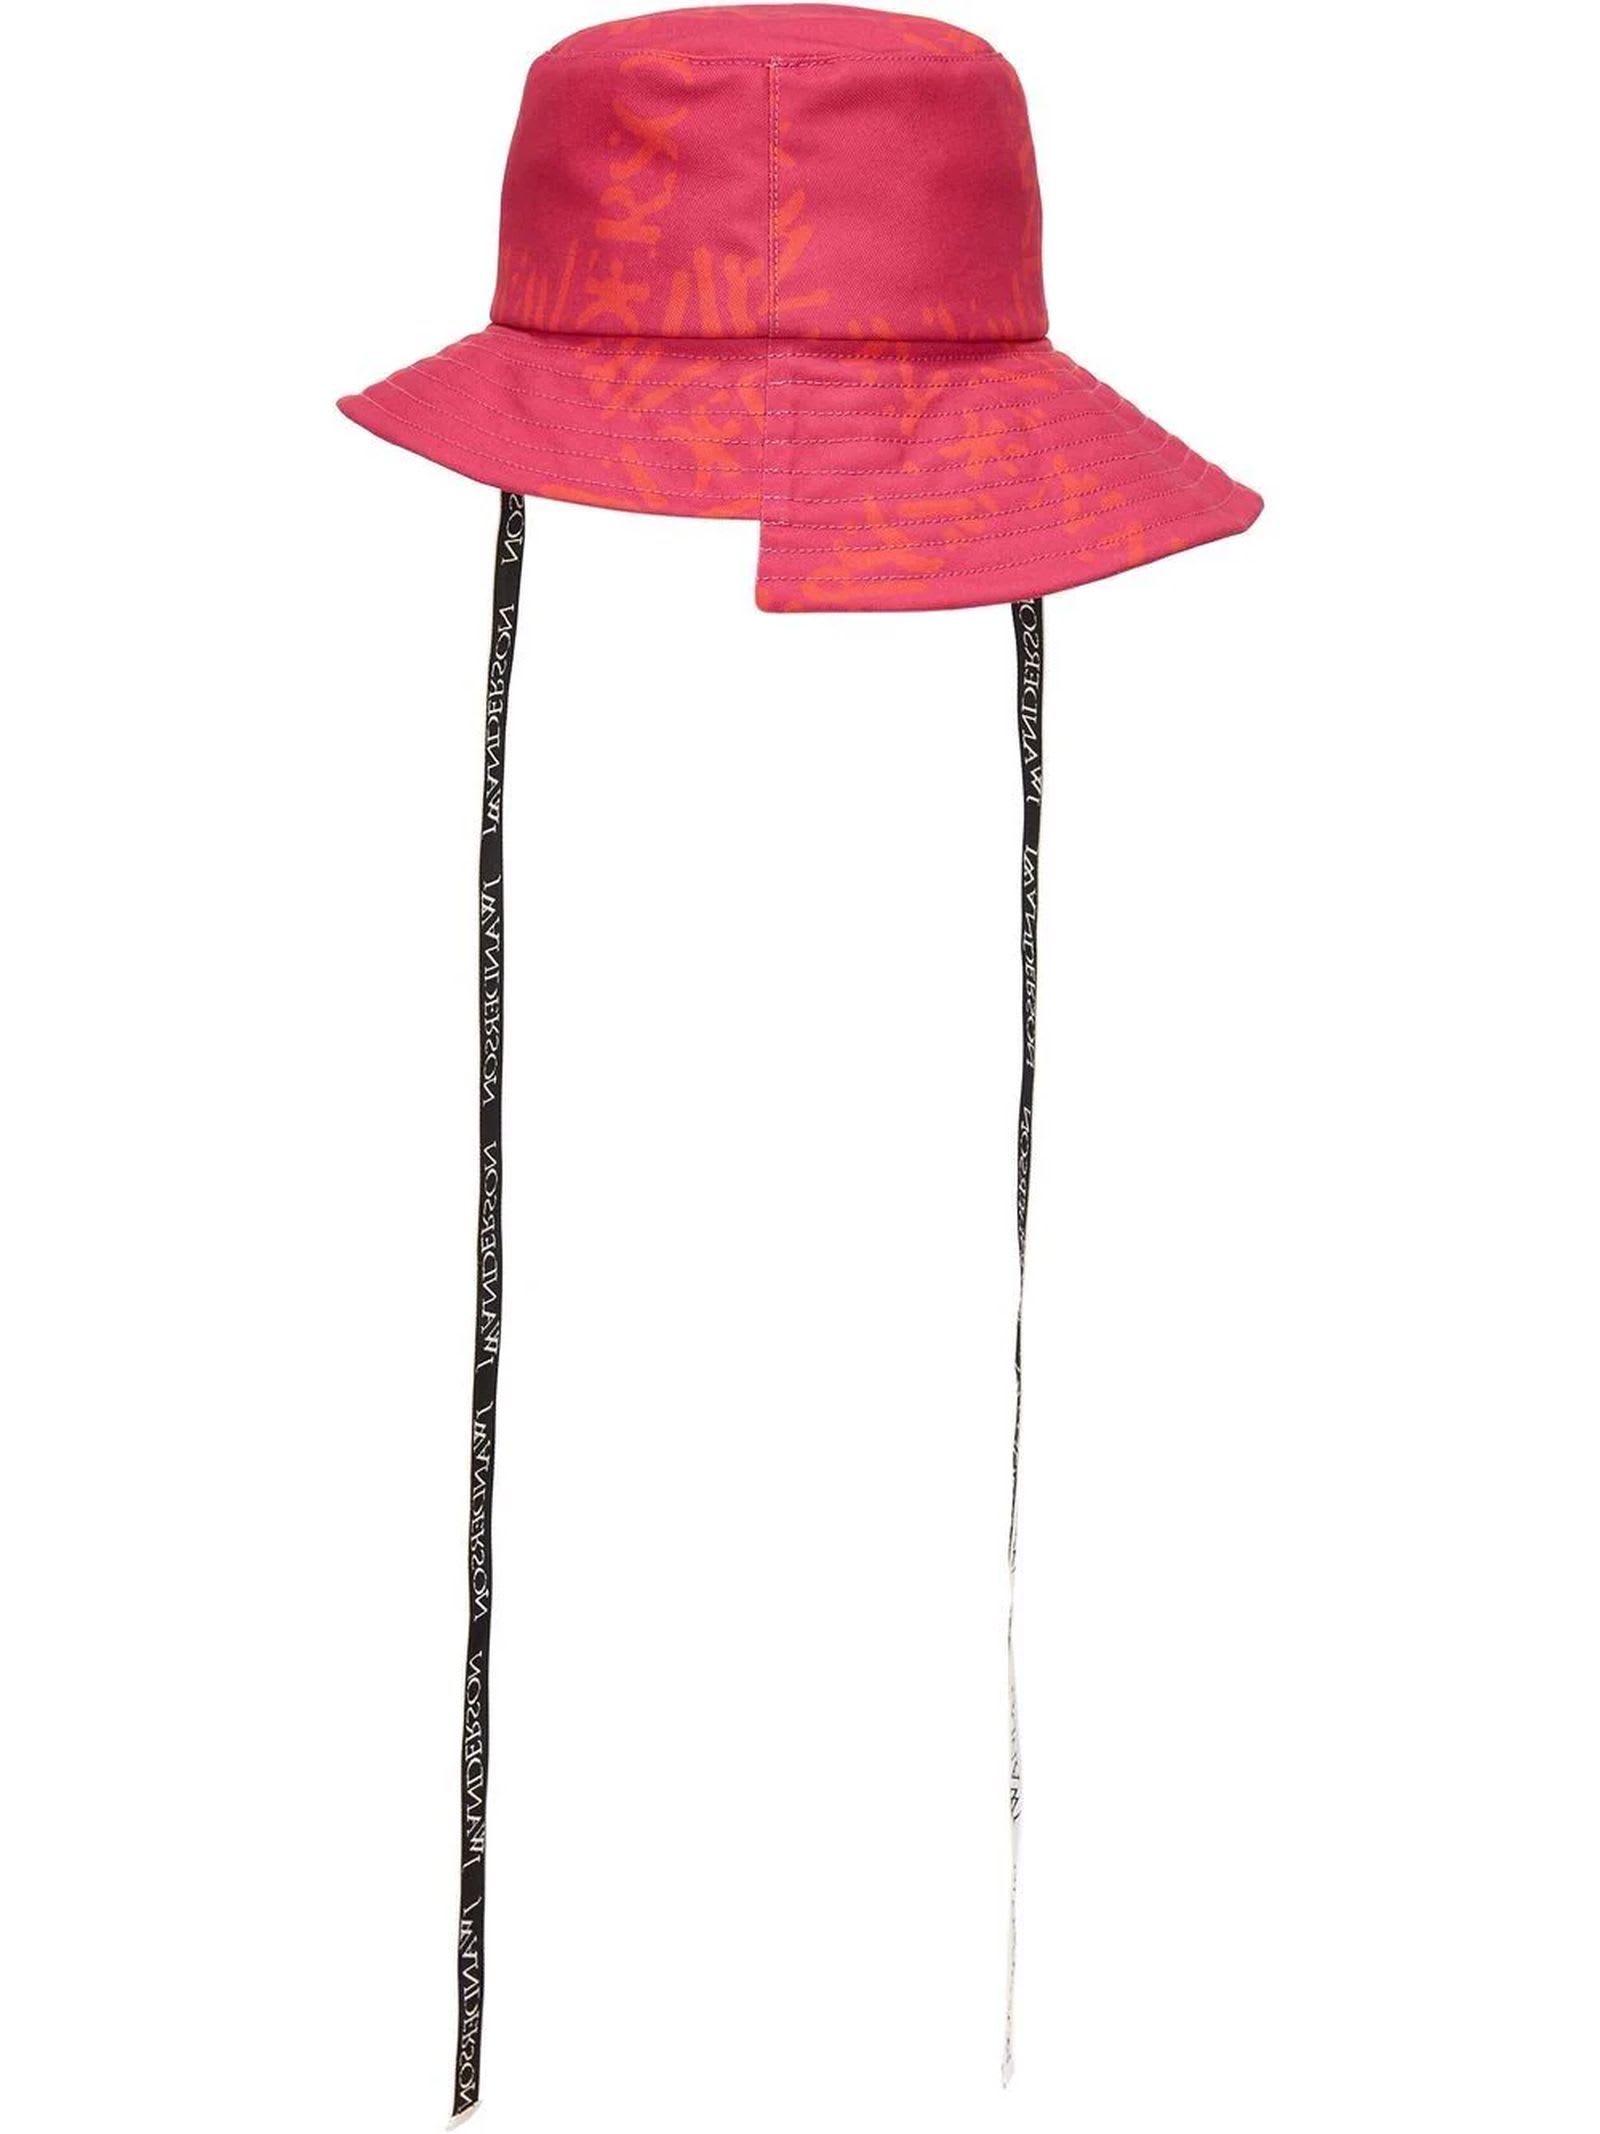 J.W. Anderson Hot Pink Bucket Hat